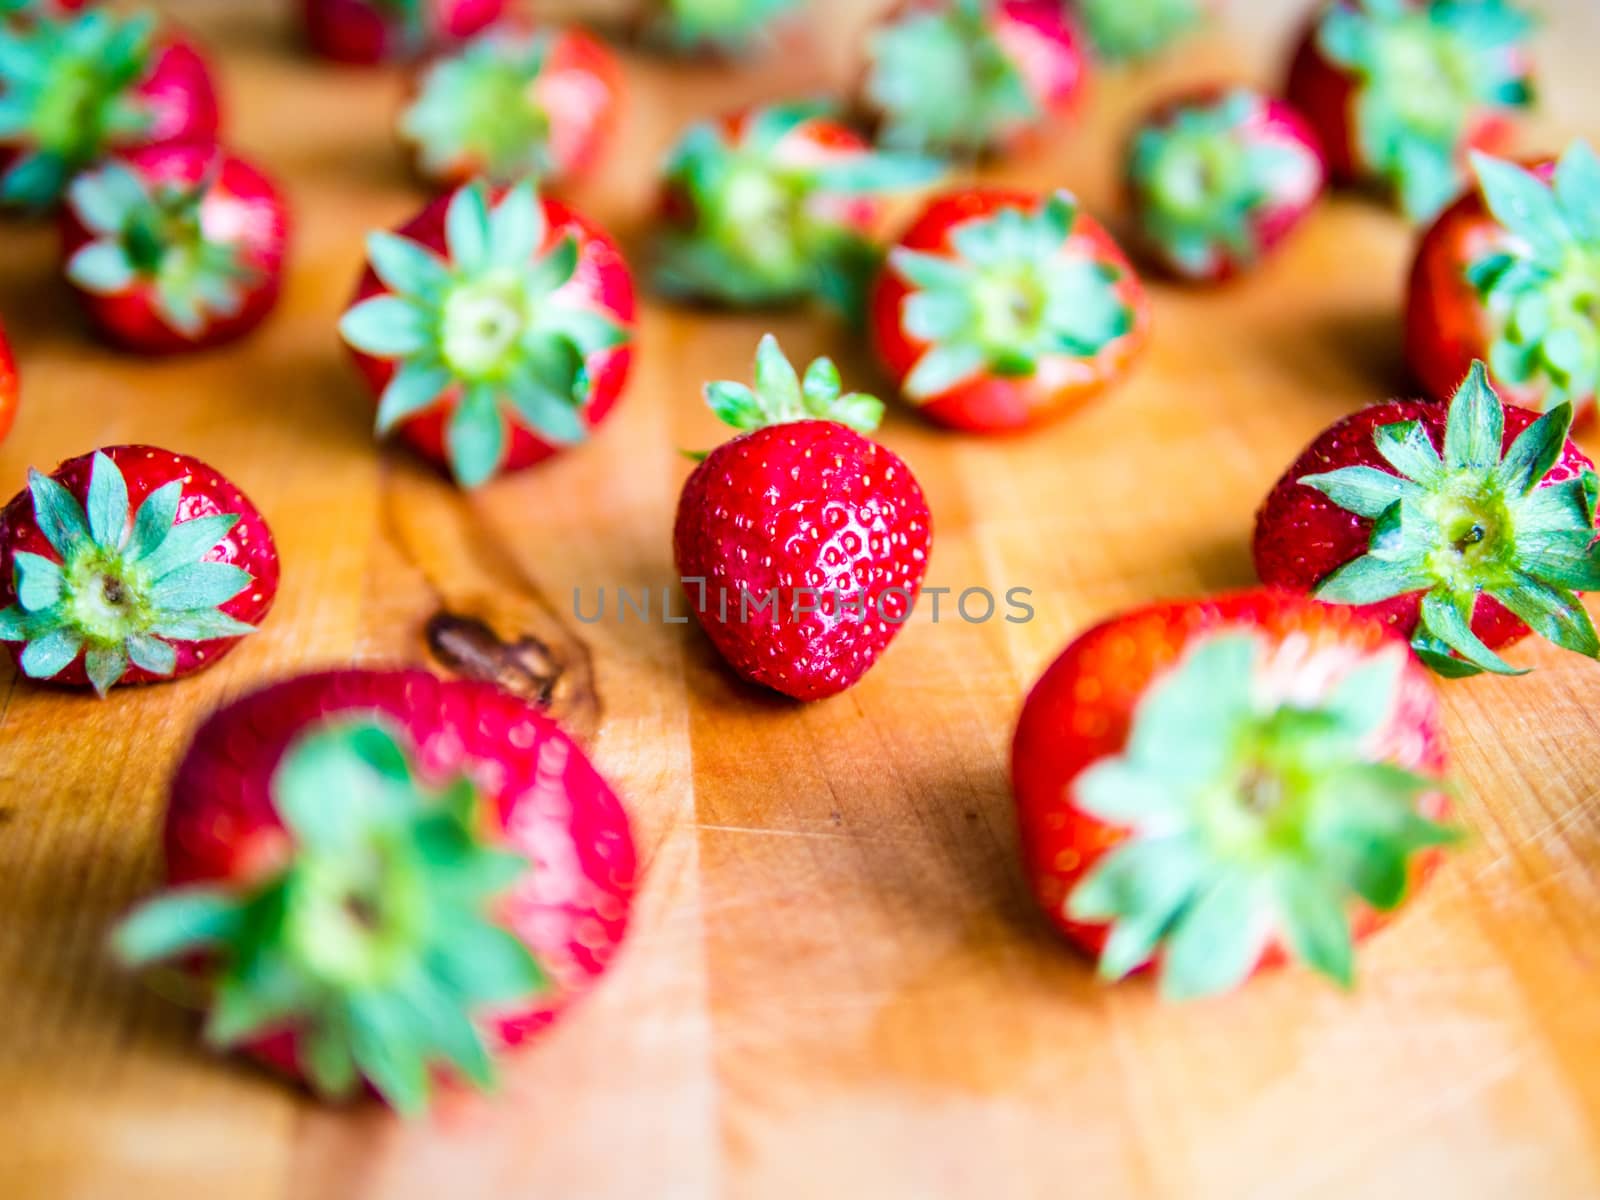 Arranged strawberries on a wooden board by weruskak